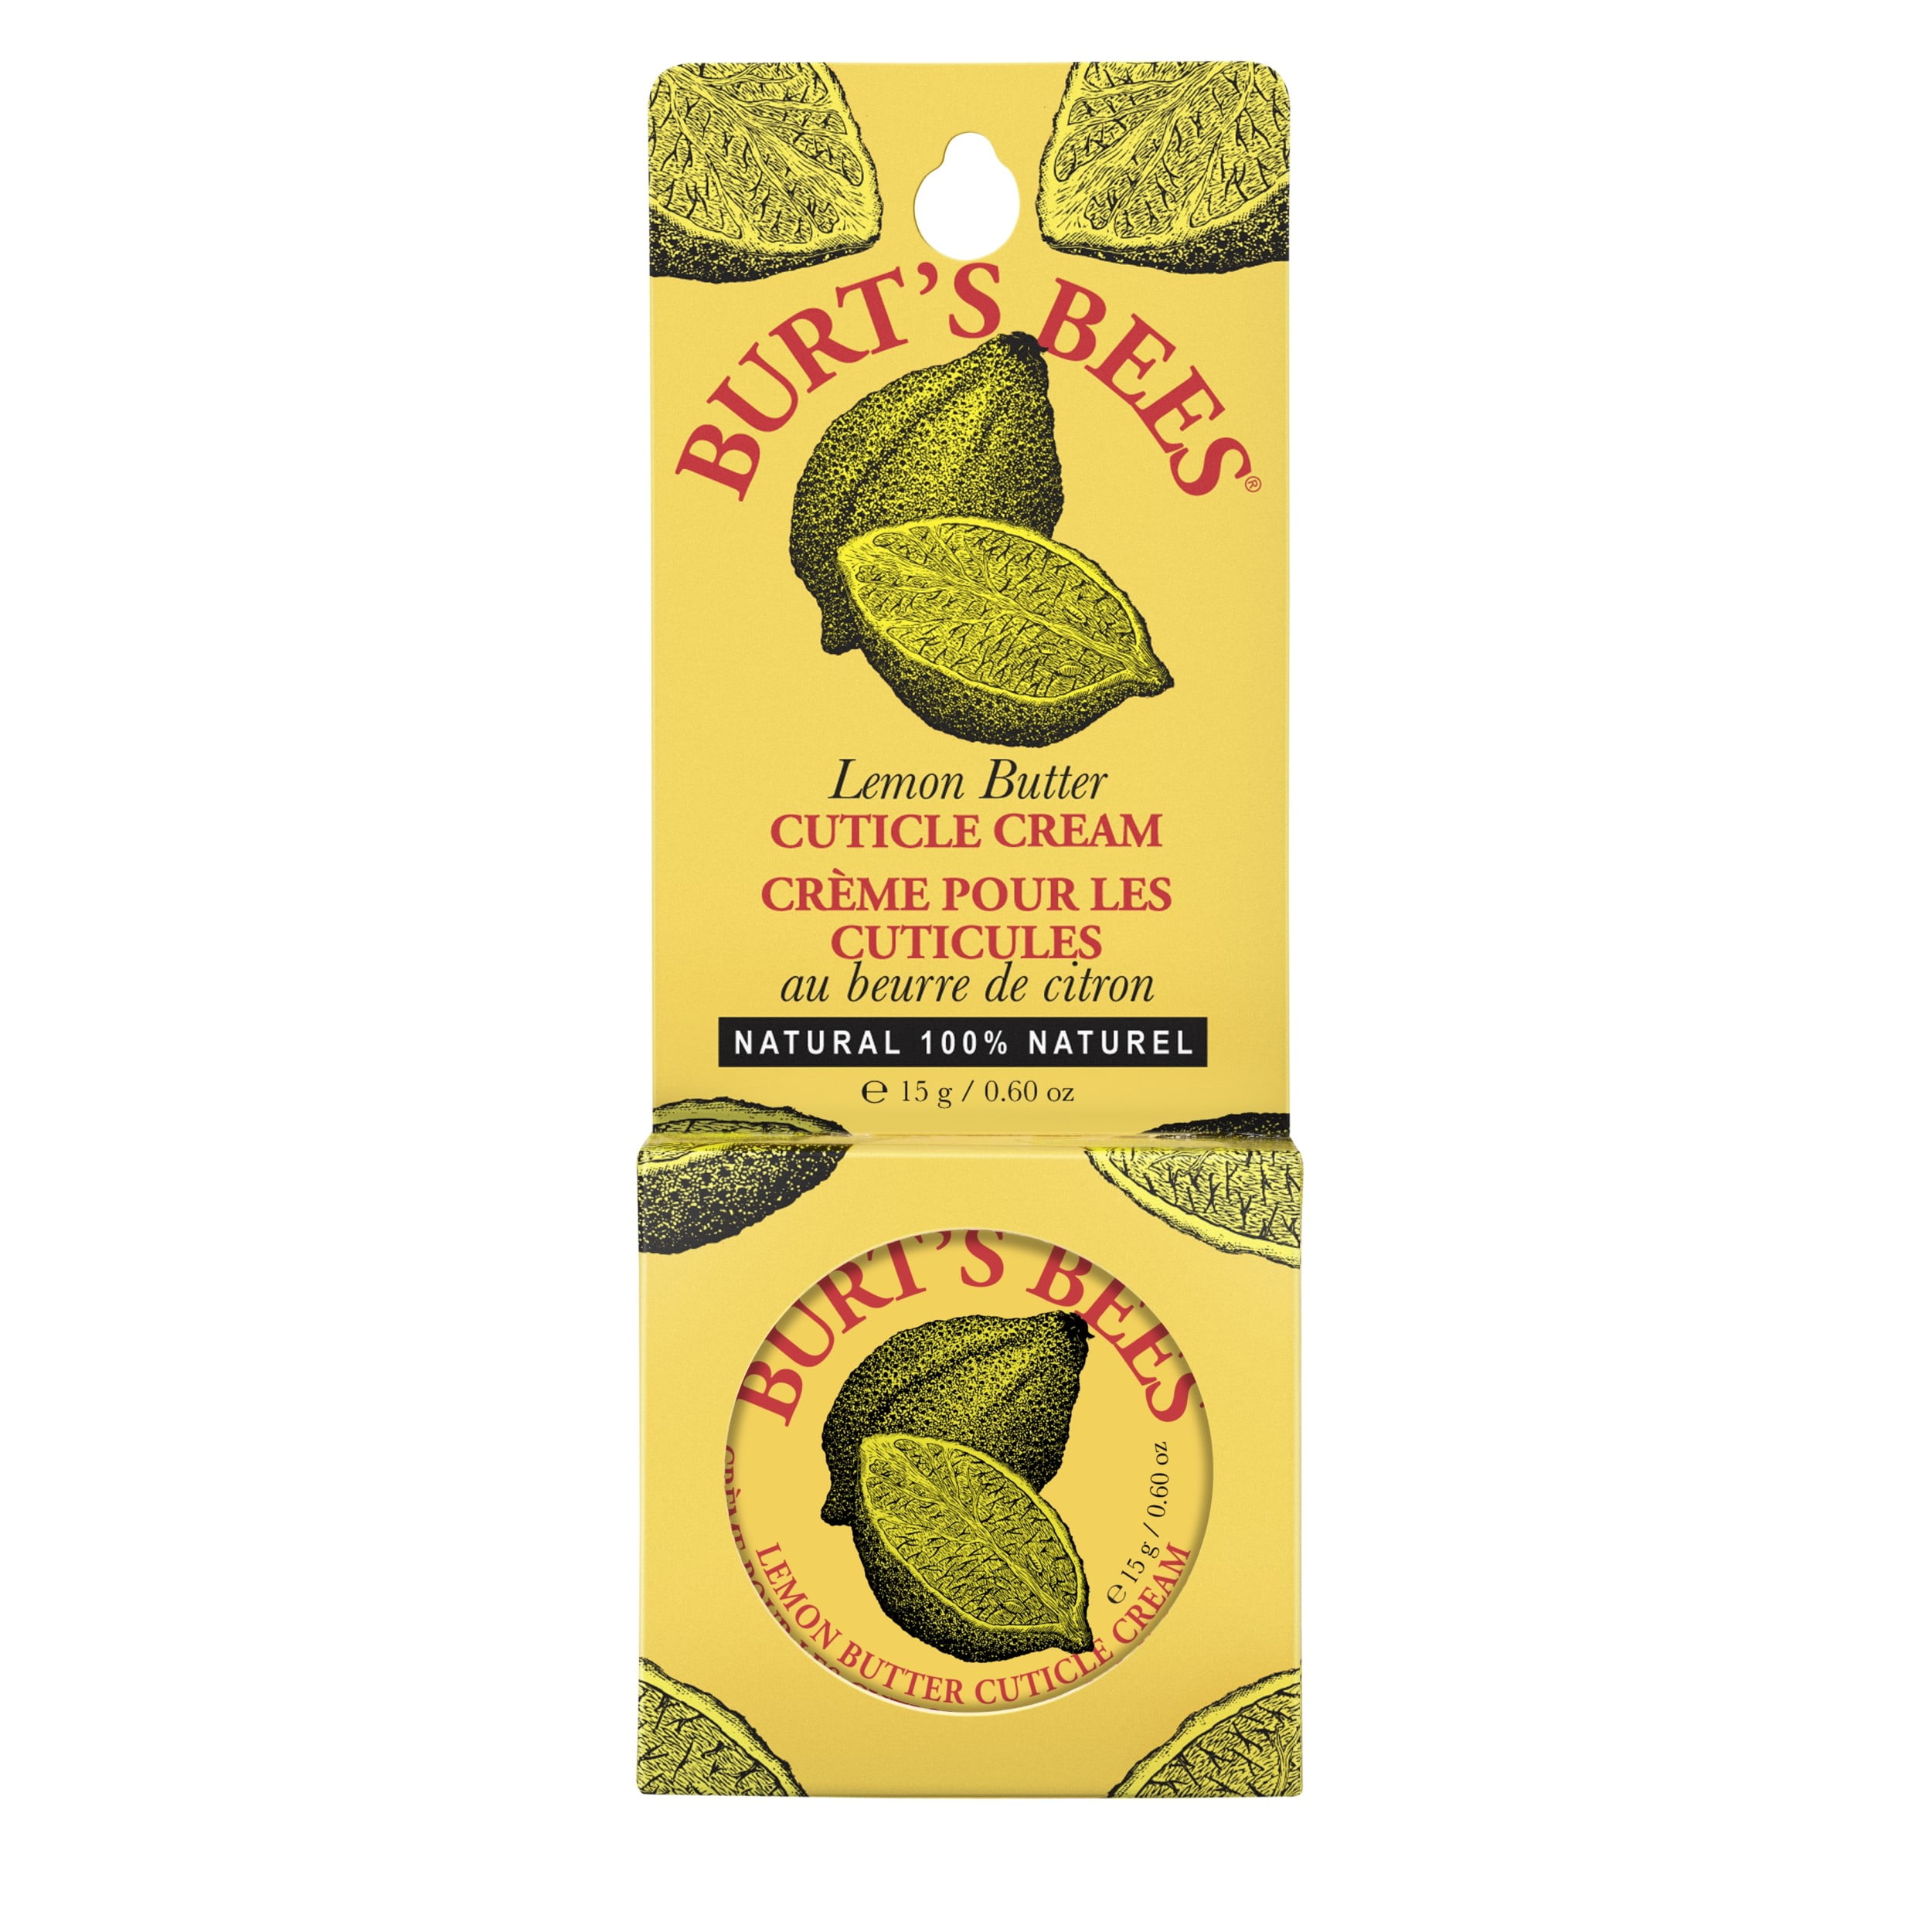 Burt's Bees 100% Natural Lemon Butter Cuticle Cream, 0.6 oz, 1 Tube